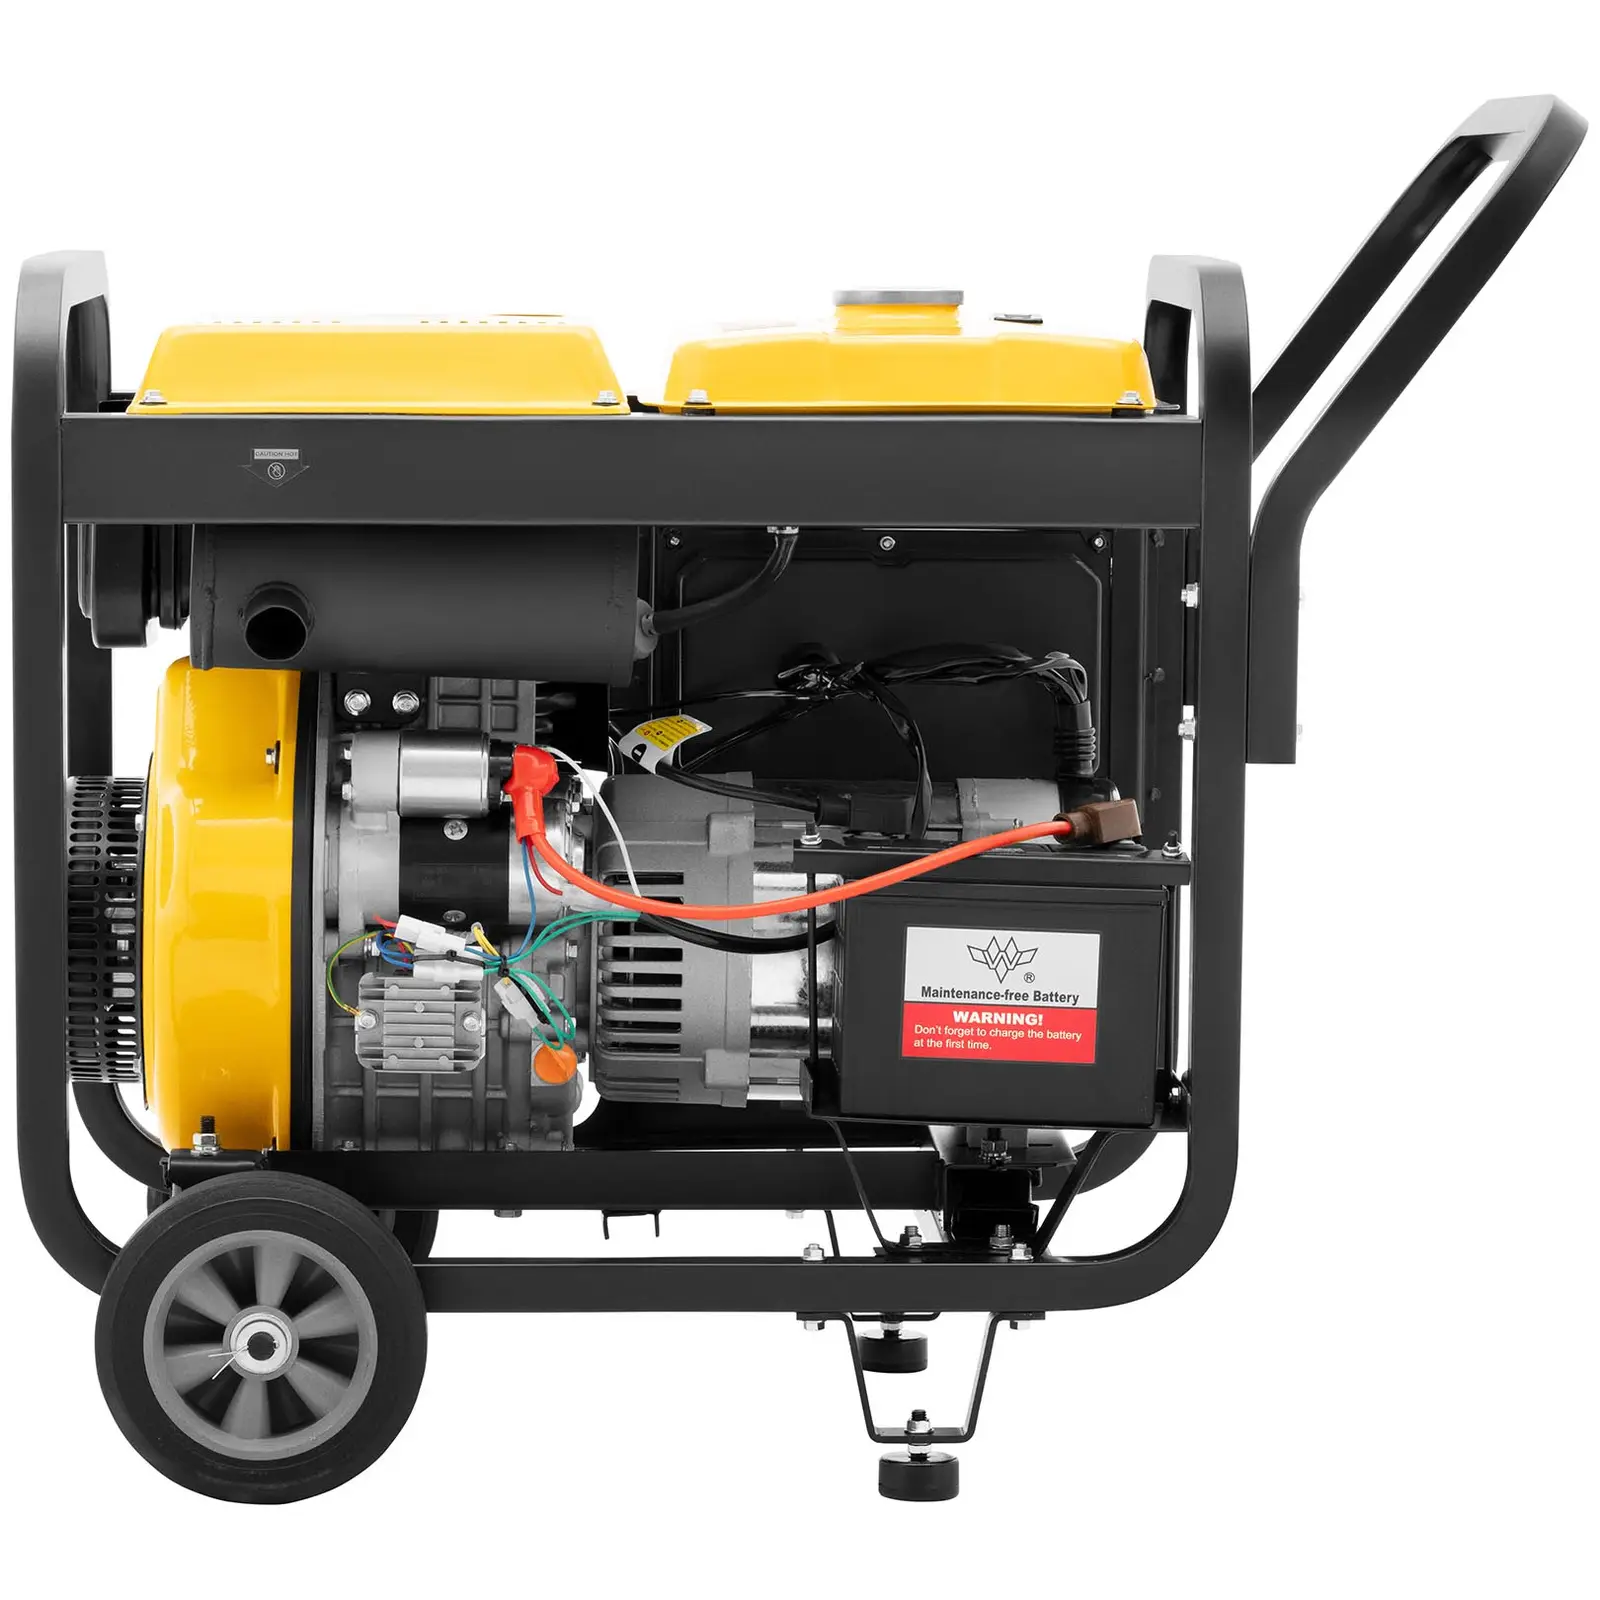 Dieselgenerator - 2500 / 7500 W - 12.5 L - 230/400 V - mobil - AVR - Euro 5